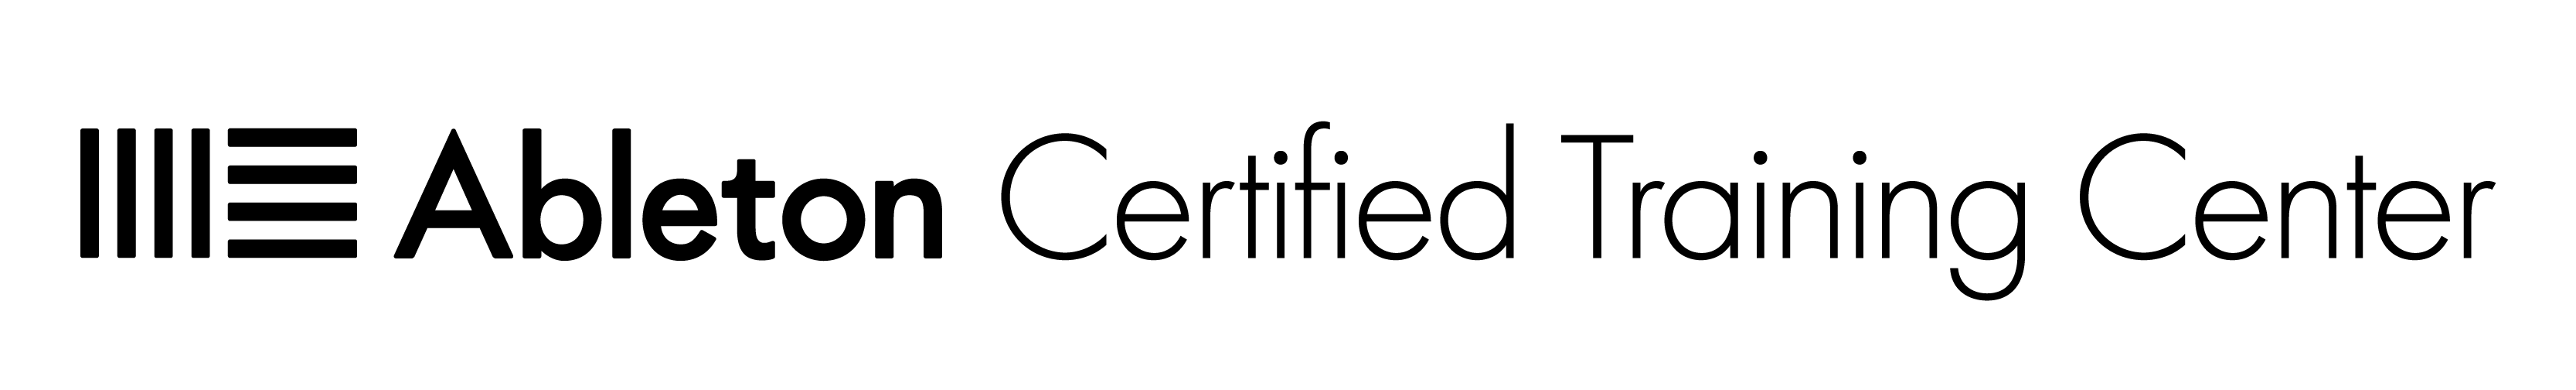 Ableton_certified_training_center